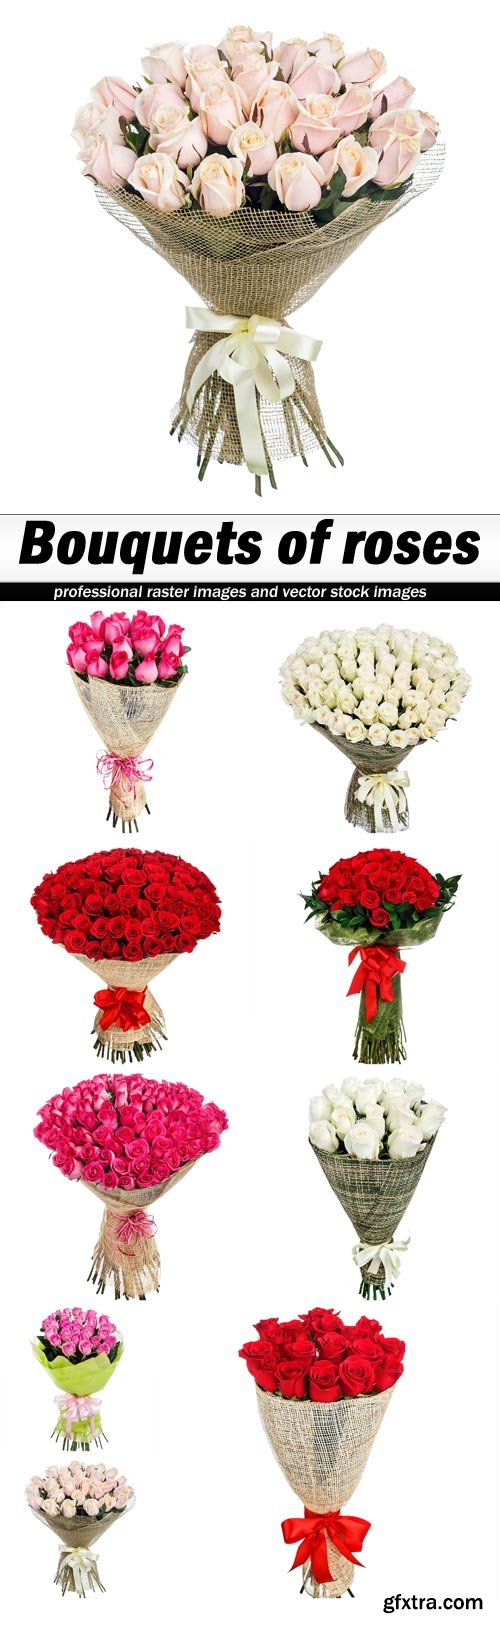 Bouquets of roses - 9 UHQ JPEG